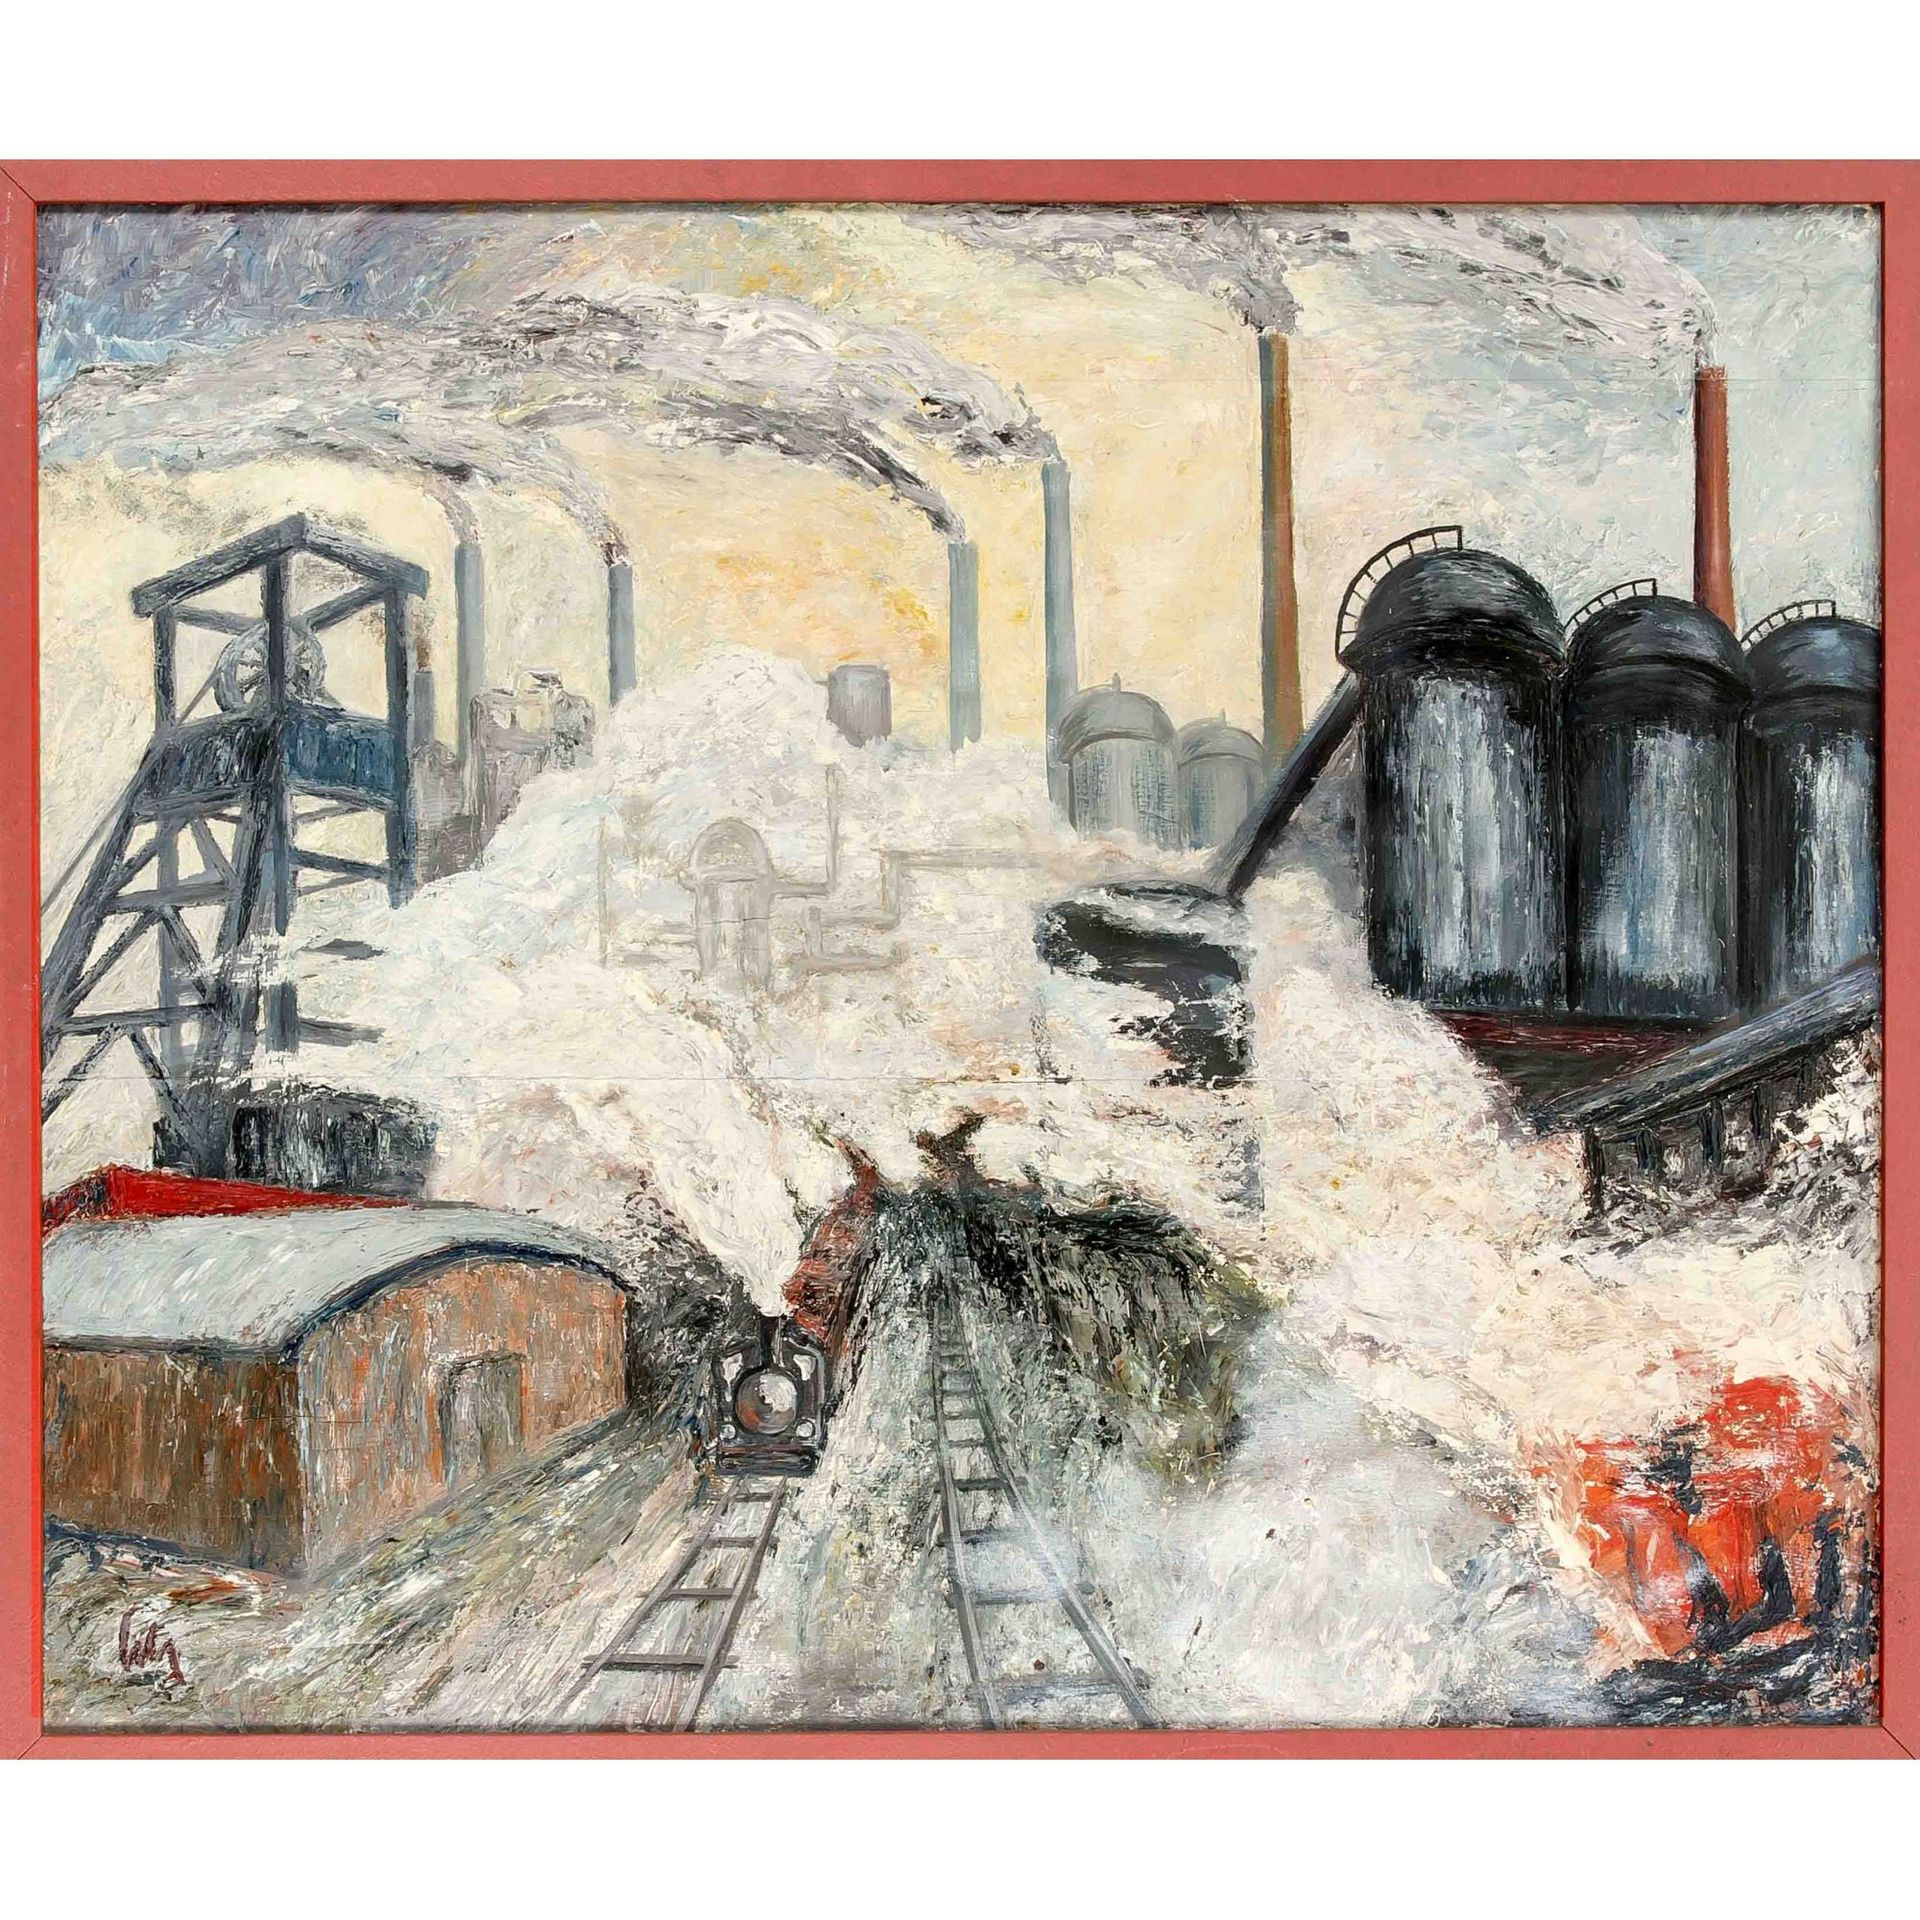 Null 不明身份的画家，20世纪中期，带有蒸汽机车的大型工业景观，胶合板上的油画，左下方有模糊的签名，100×120厘米，有框架的104×124厘米